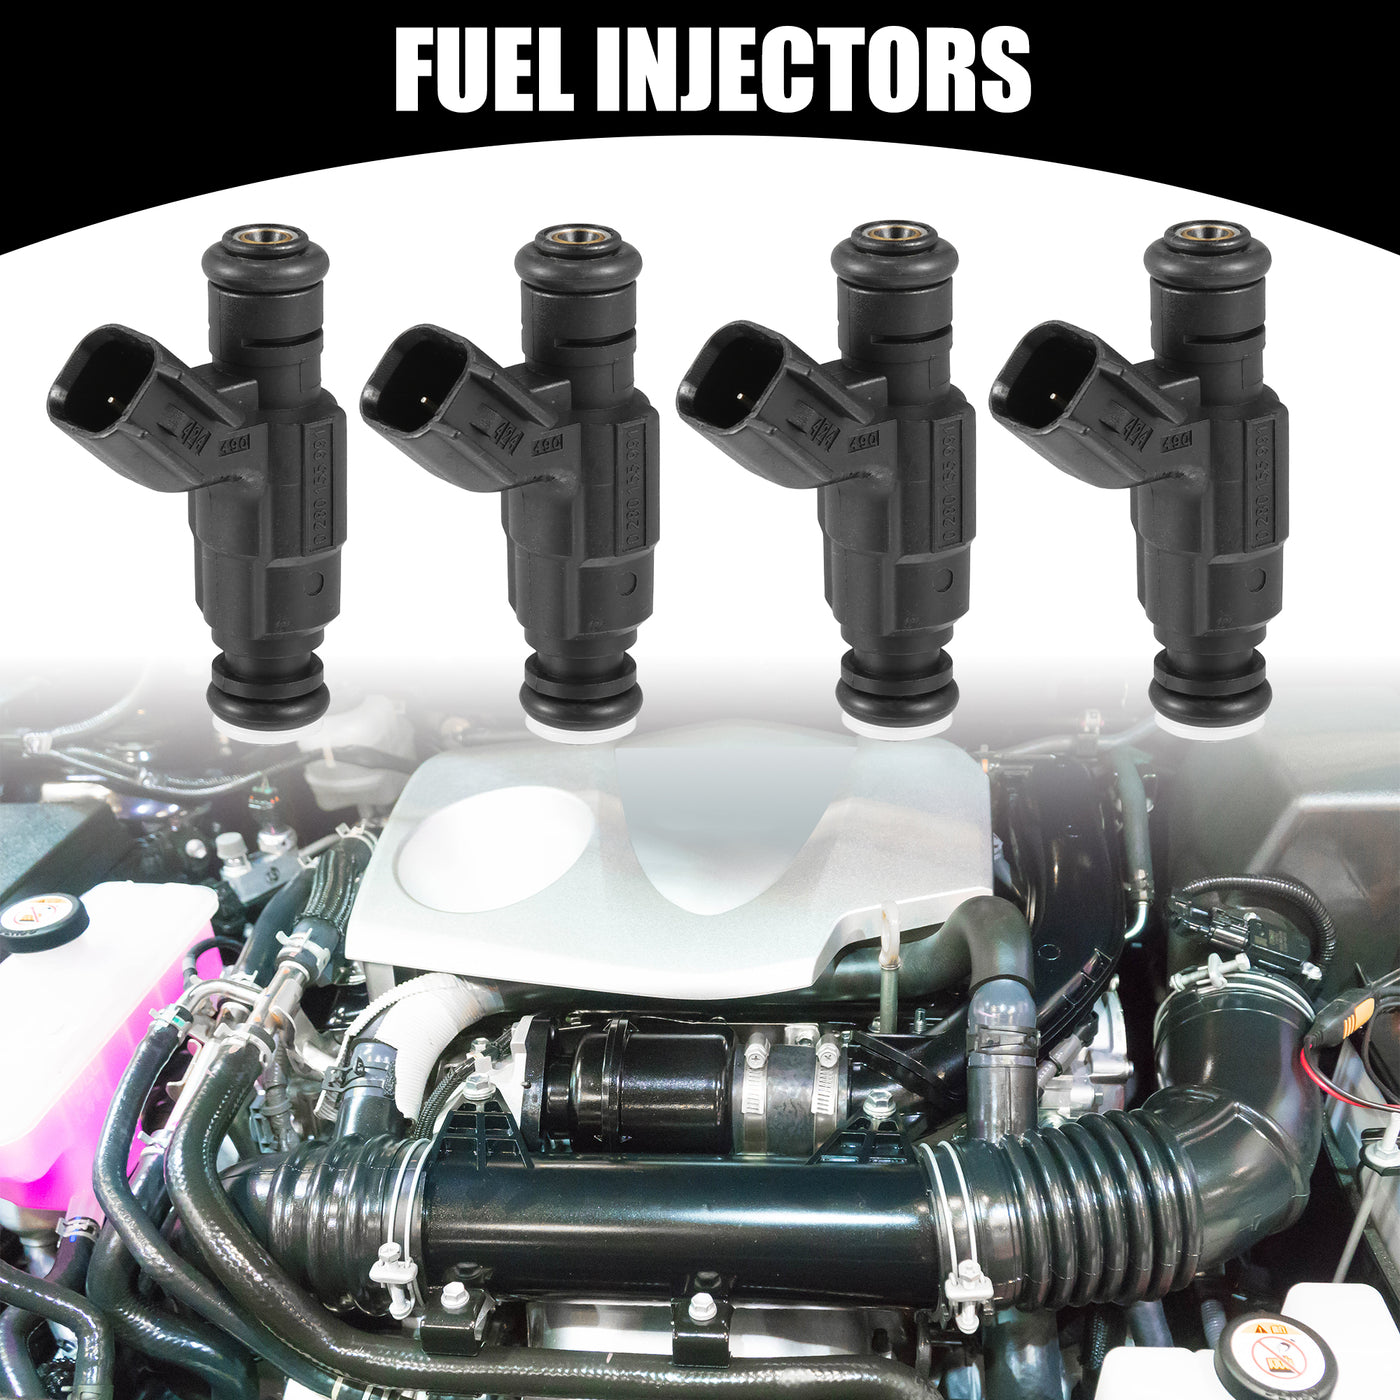 Partuto Fuel Injector - Car Inner Engnie Fuel Injectors - for Mini One Cooper 2000-2008 Metal Black - 4 Pcs